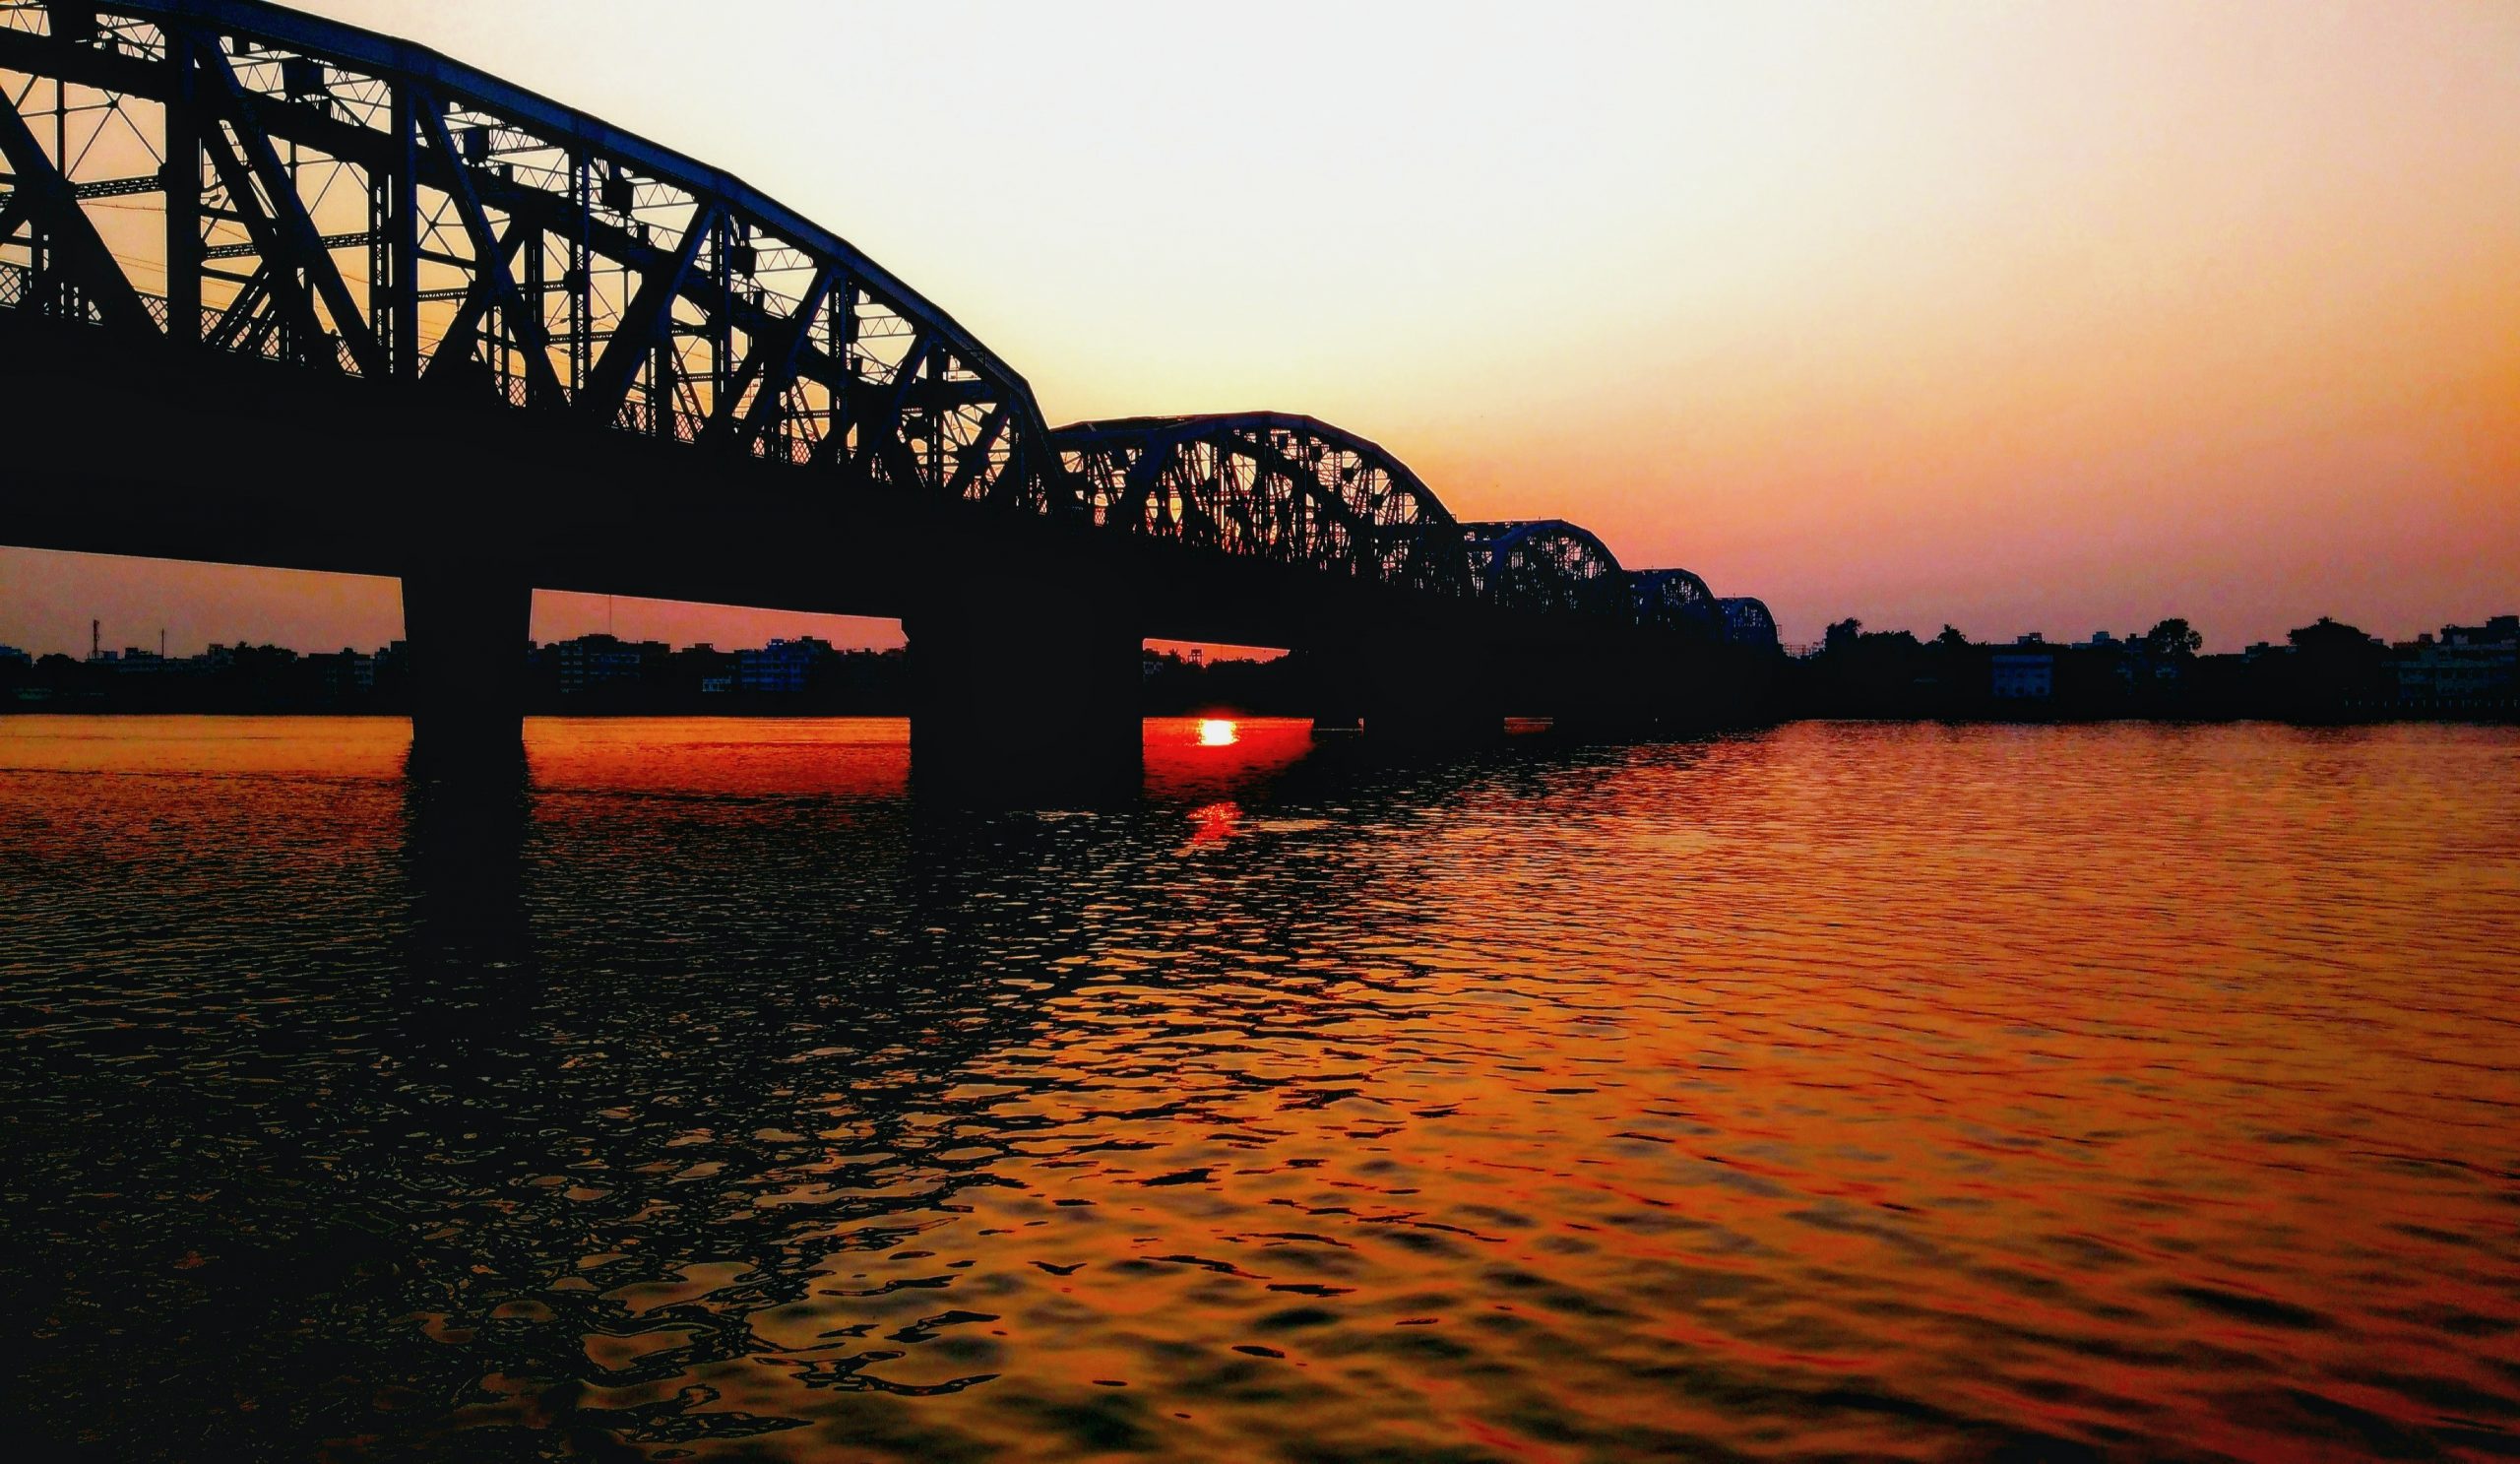 Arch Bridge on the River Sunset